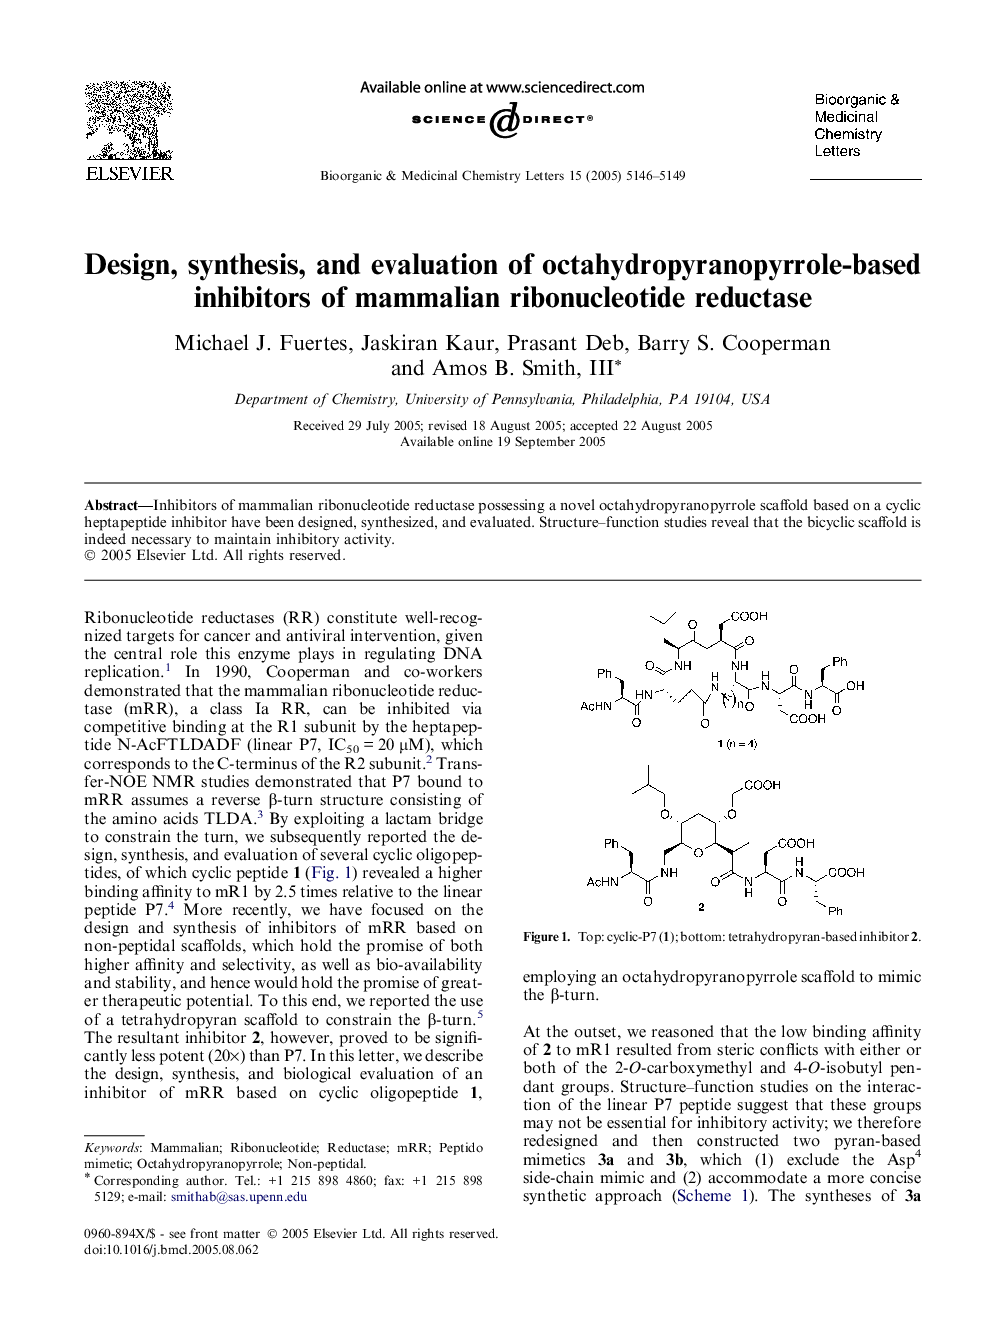 Design, synthesis, and evaluation of octahydropyranopyrrole-based inhibitors of mammalian ribonucleotide reductase